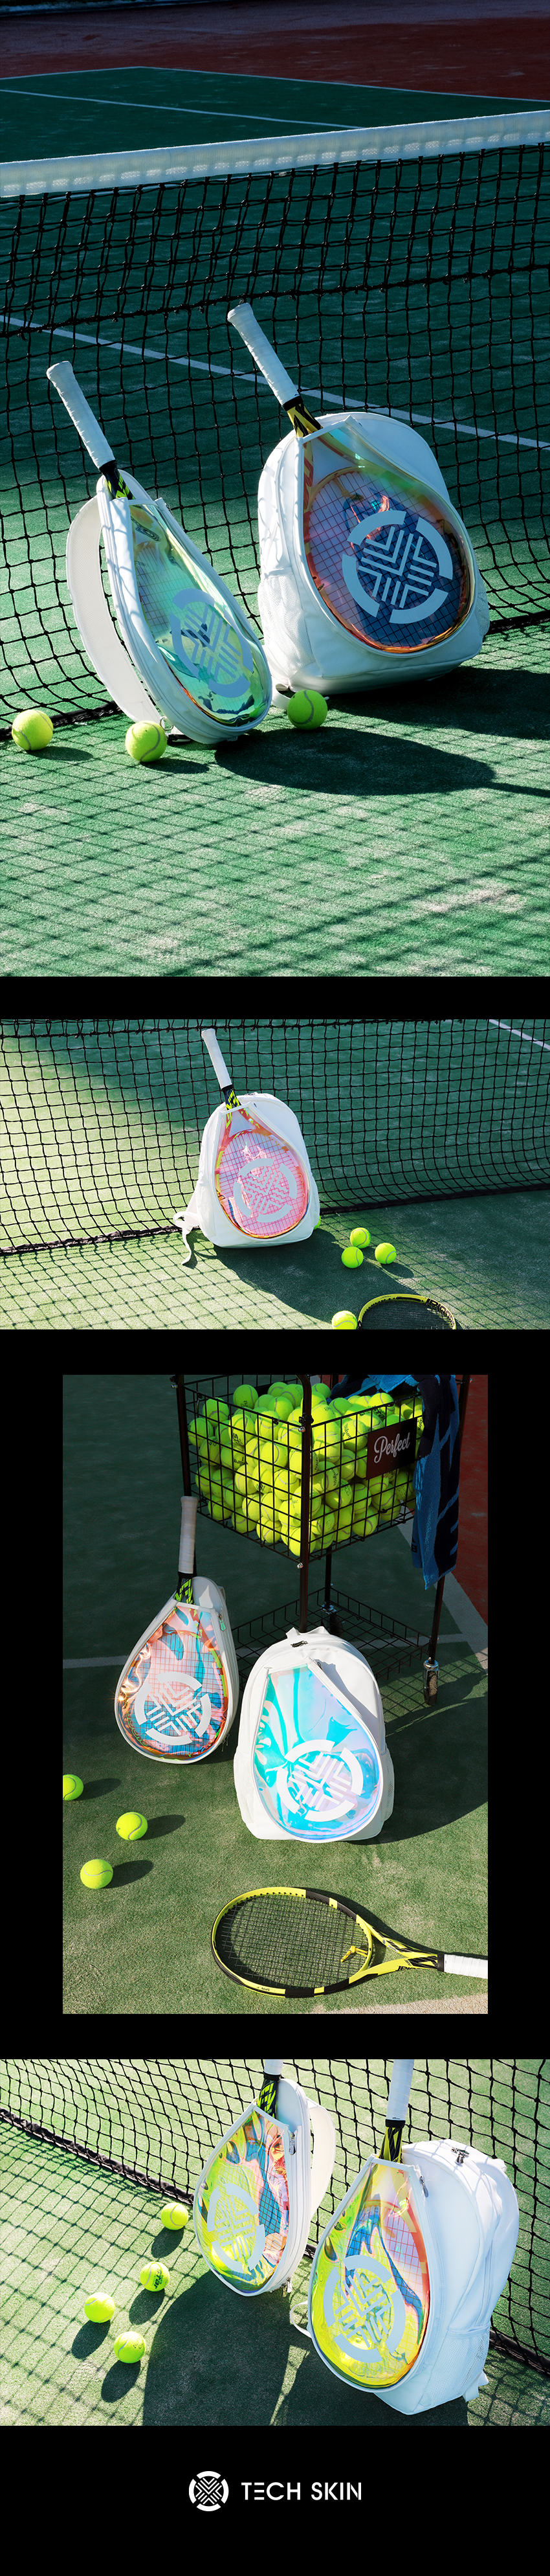 techskin_hologram_tennis_backpack_detail_05.jpg